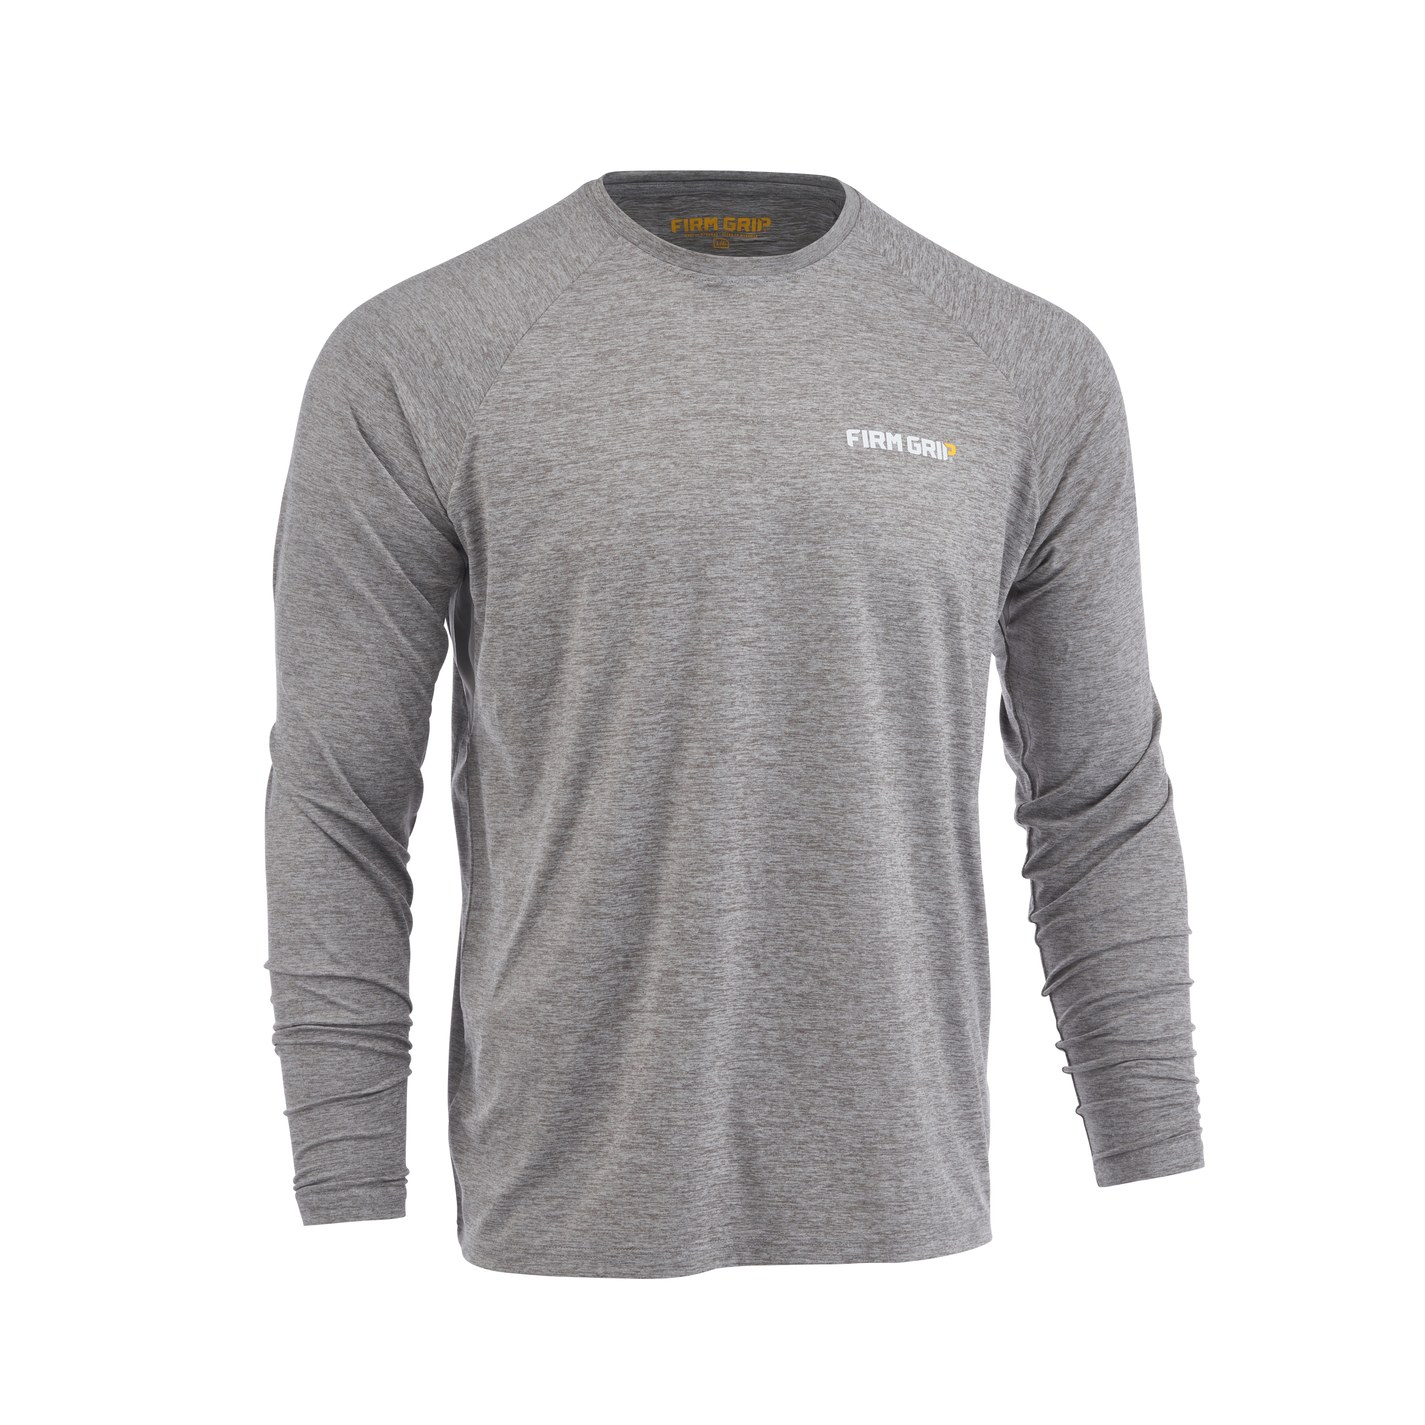 Men's Gray Performance Long Sleeved Shirt - Firm Grip